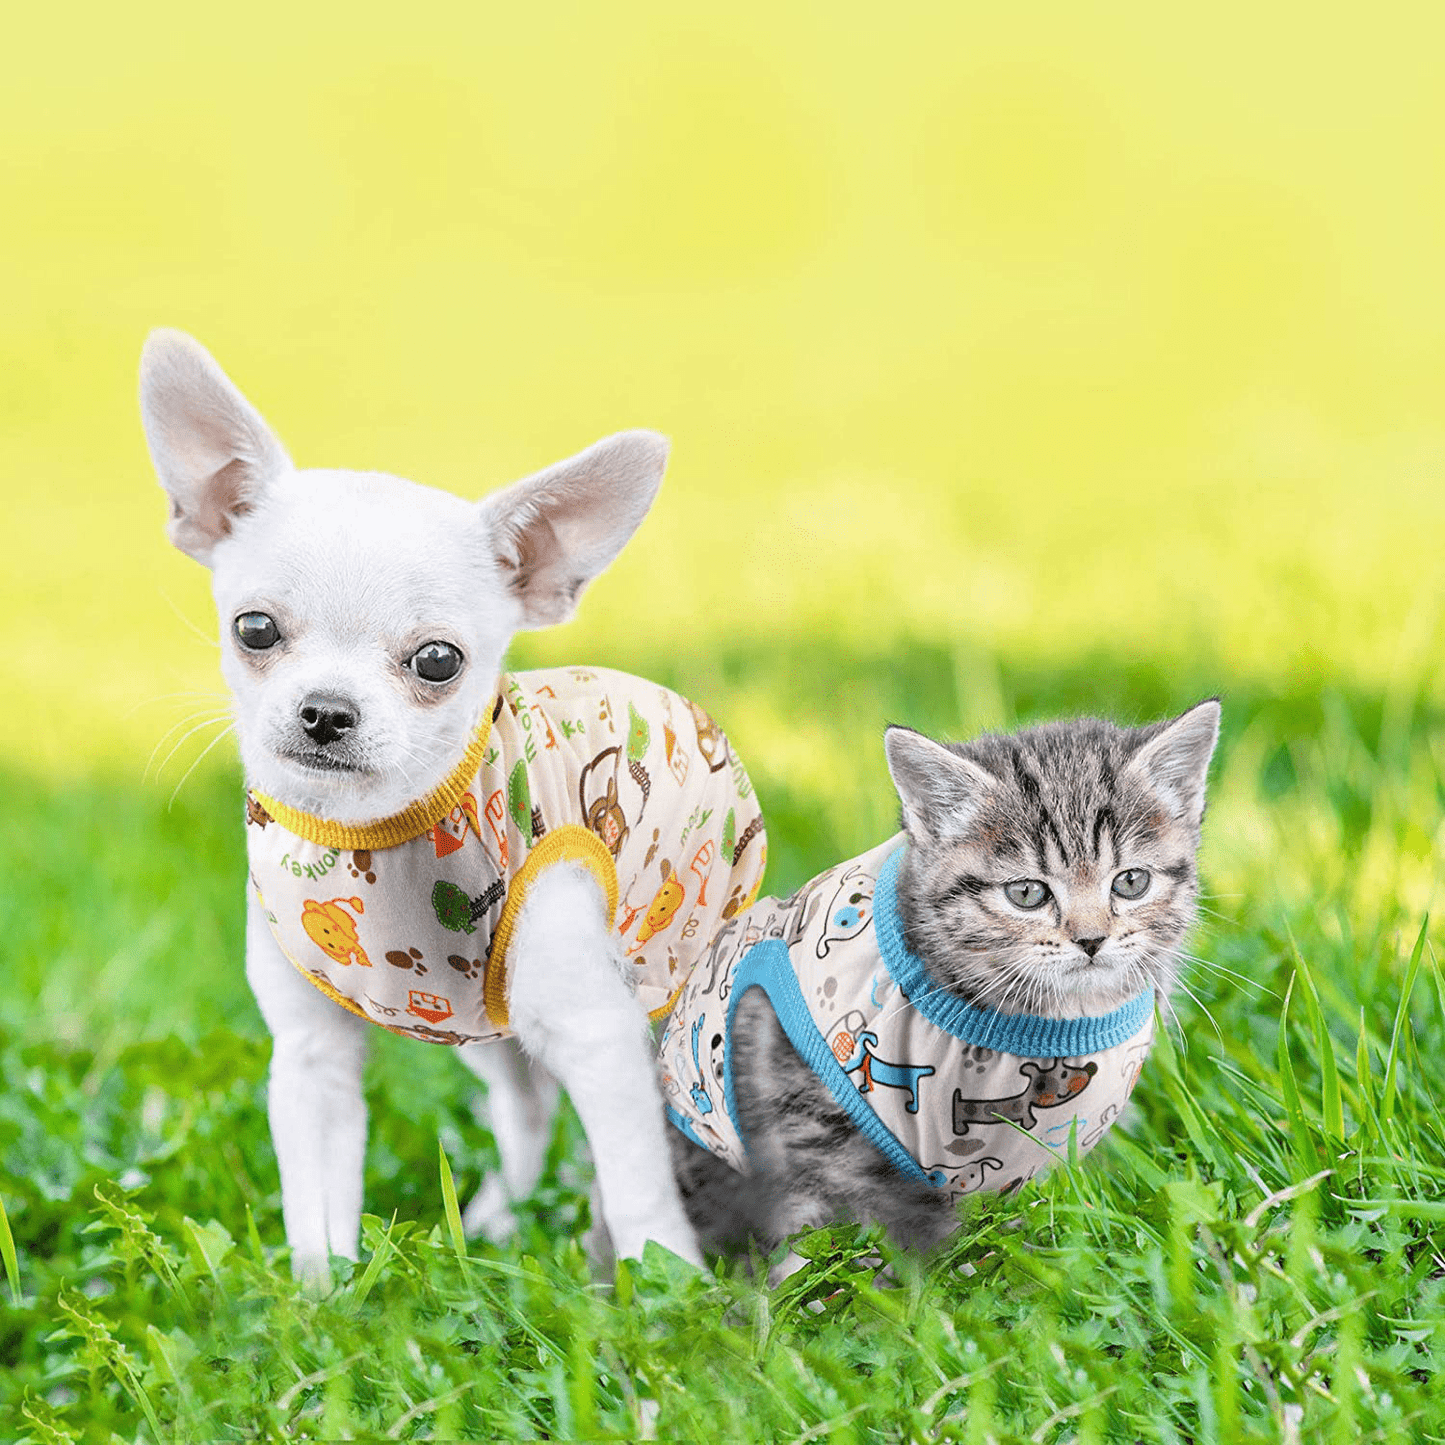 9 Pieces Dog T-Shirt Puppy Shirts Cute Print Pet Dog Shirt Small Dog Clothes Summer Pet Shirt Doggie Vest for Small Dogs Pets Puppy Kitten (Medium)